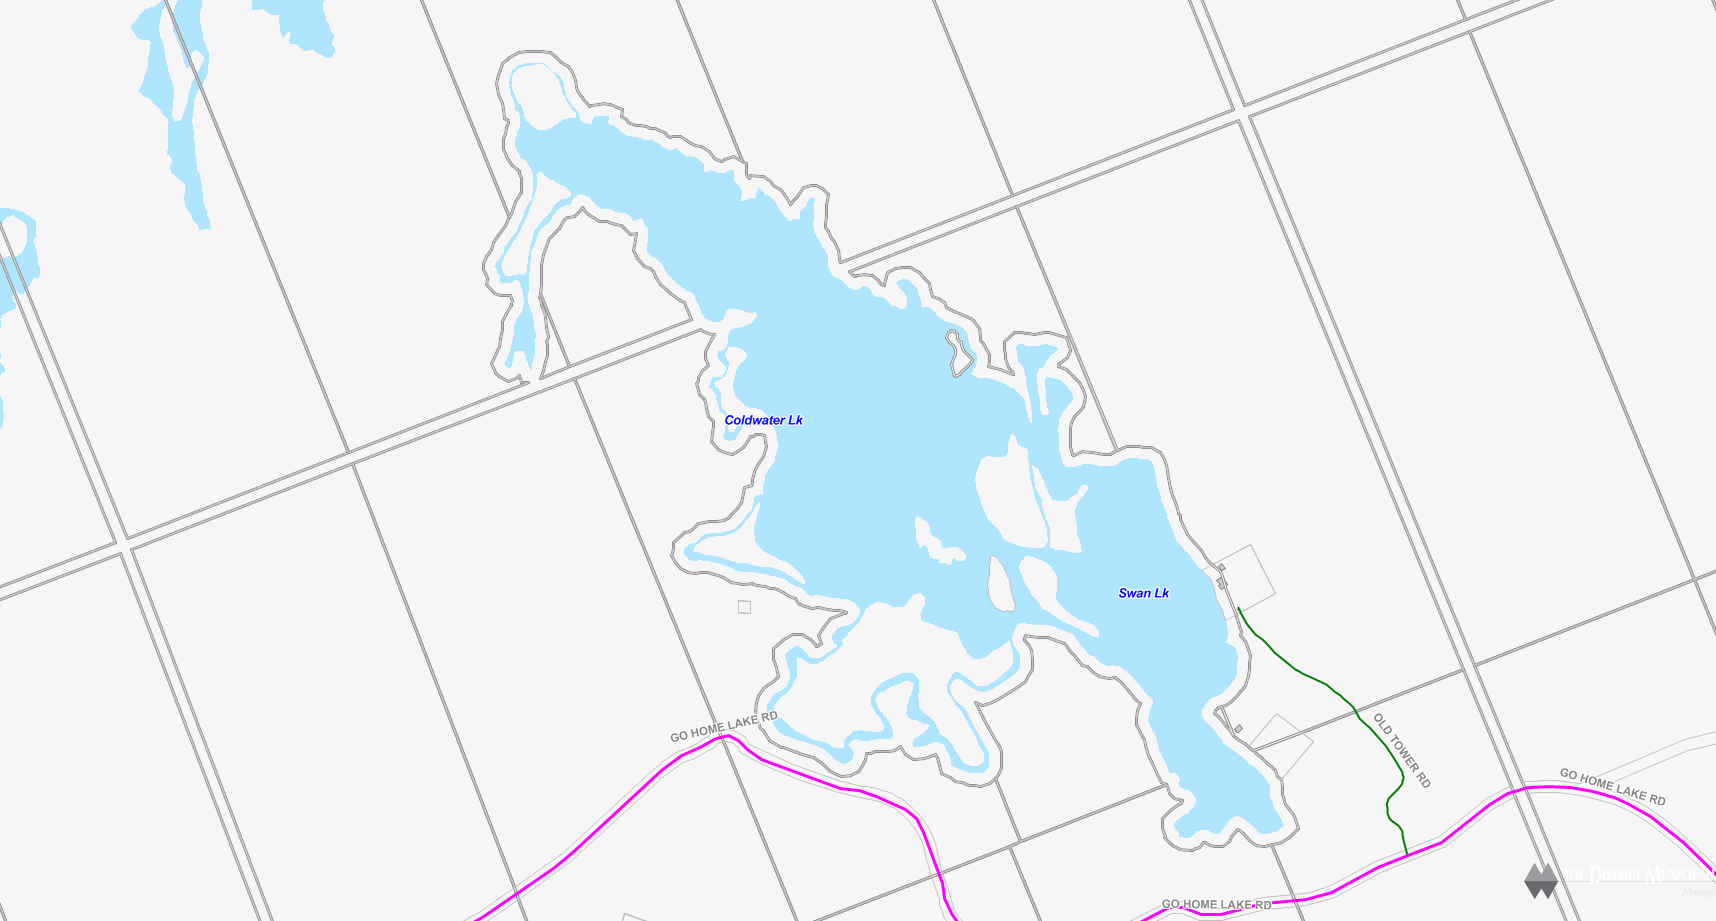 Coldwater Lake Cadastral Map - Coldwater Lake - Muskoka